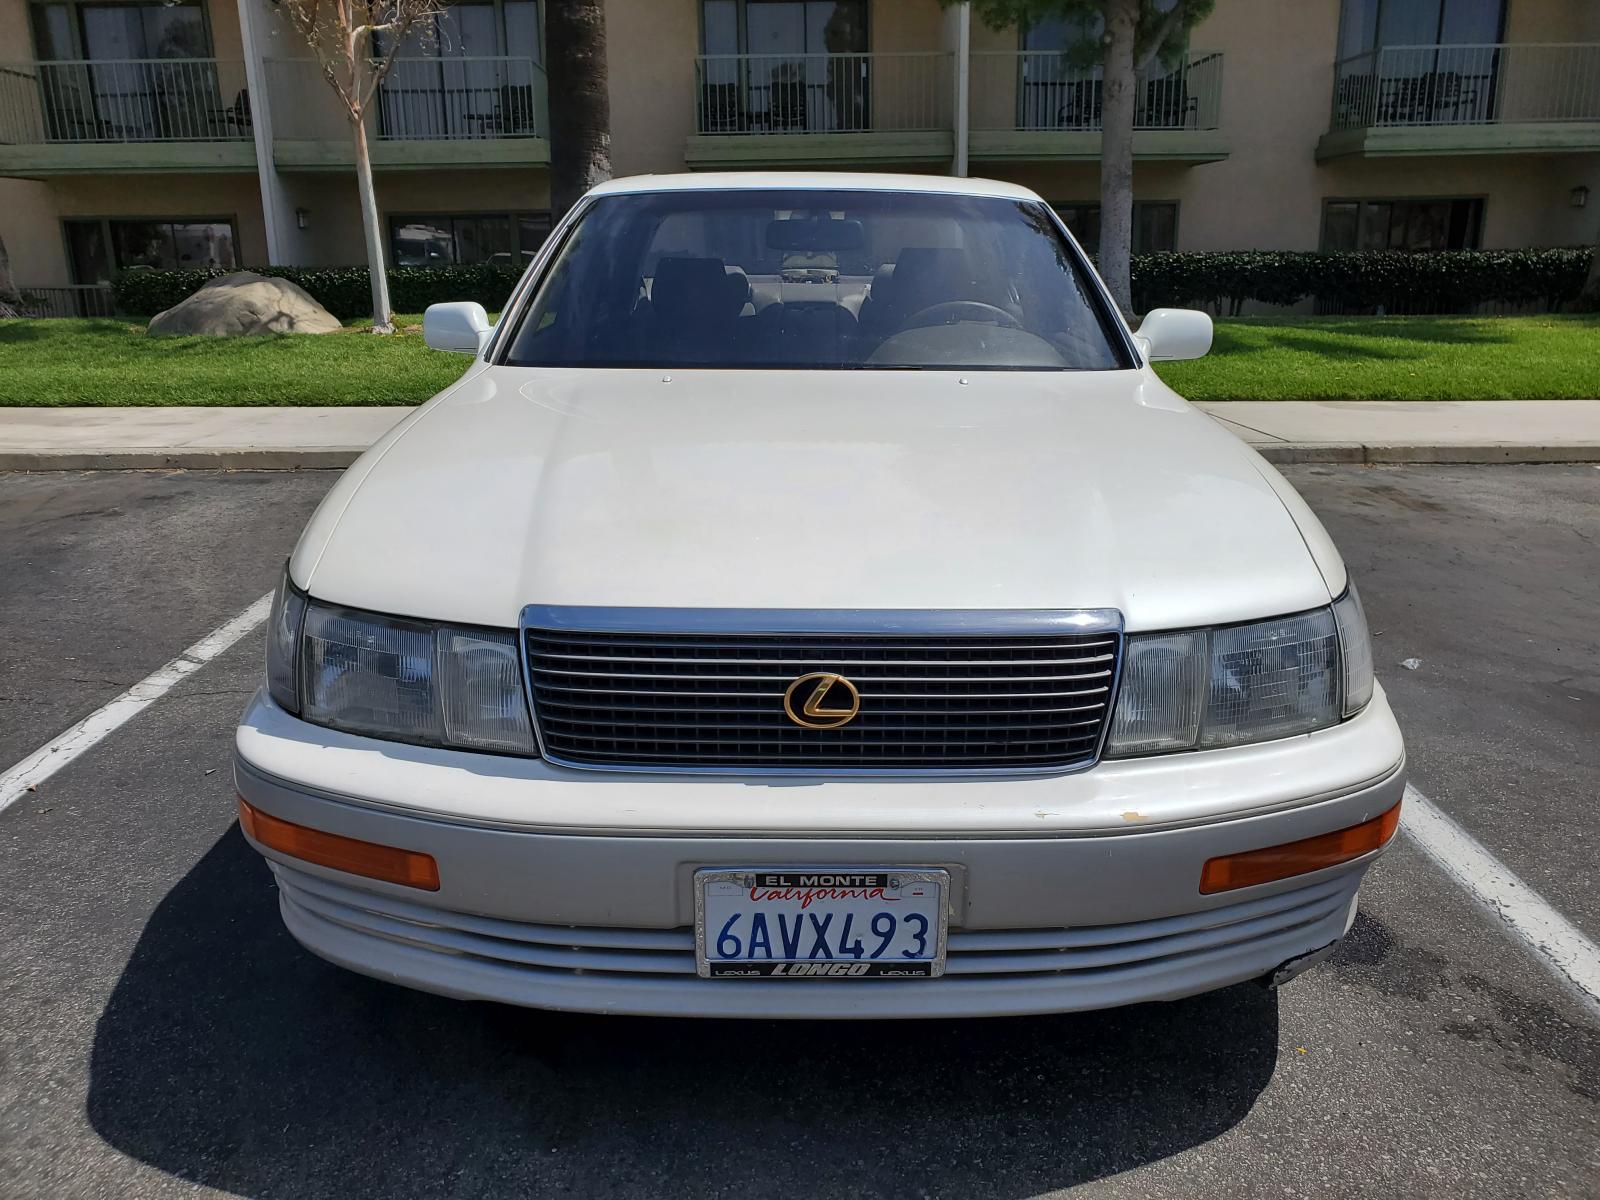 1990 Lexus LS400 w/ 256k miles washed.